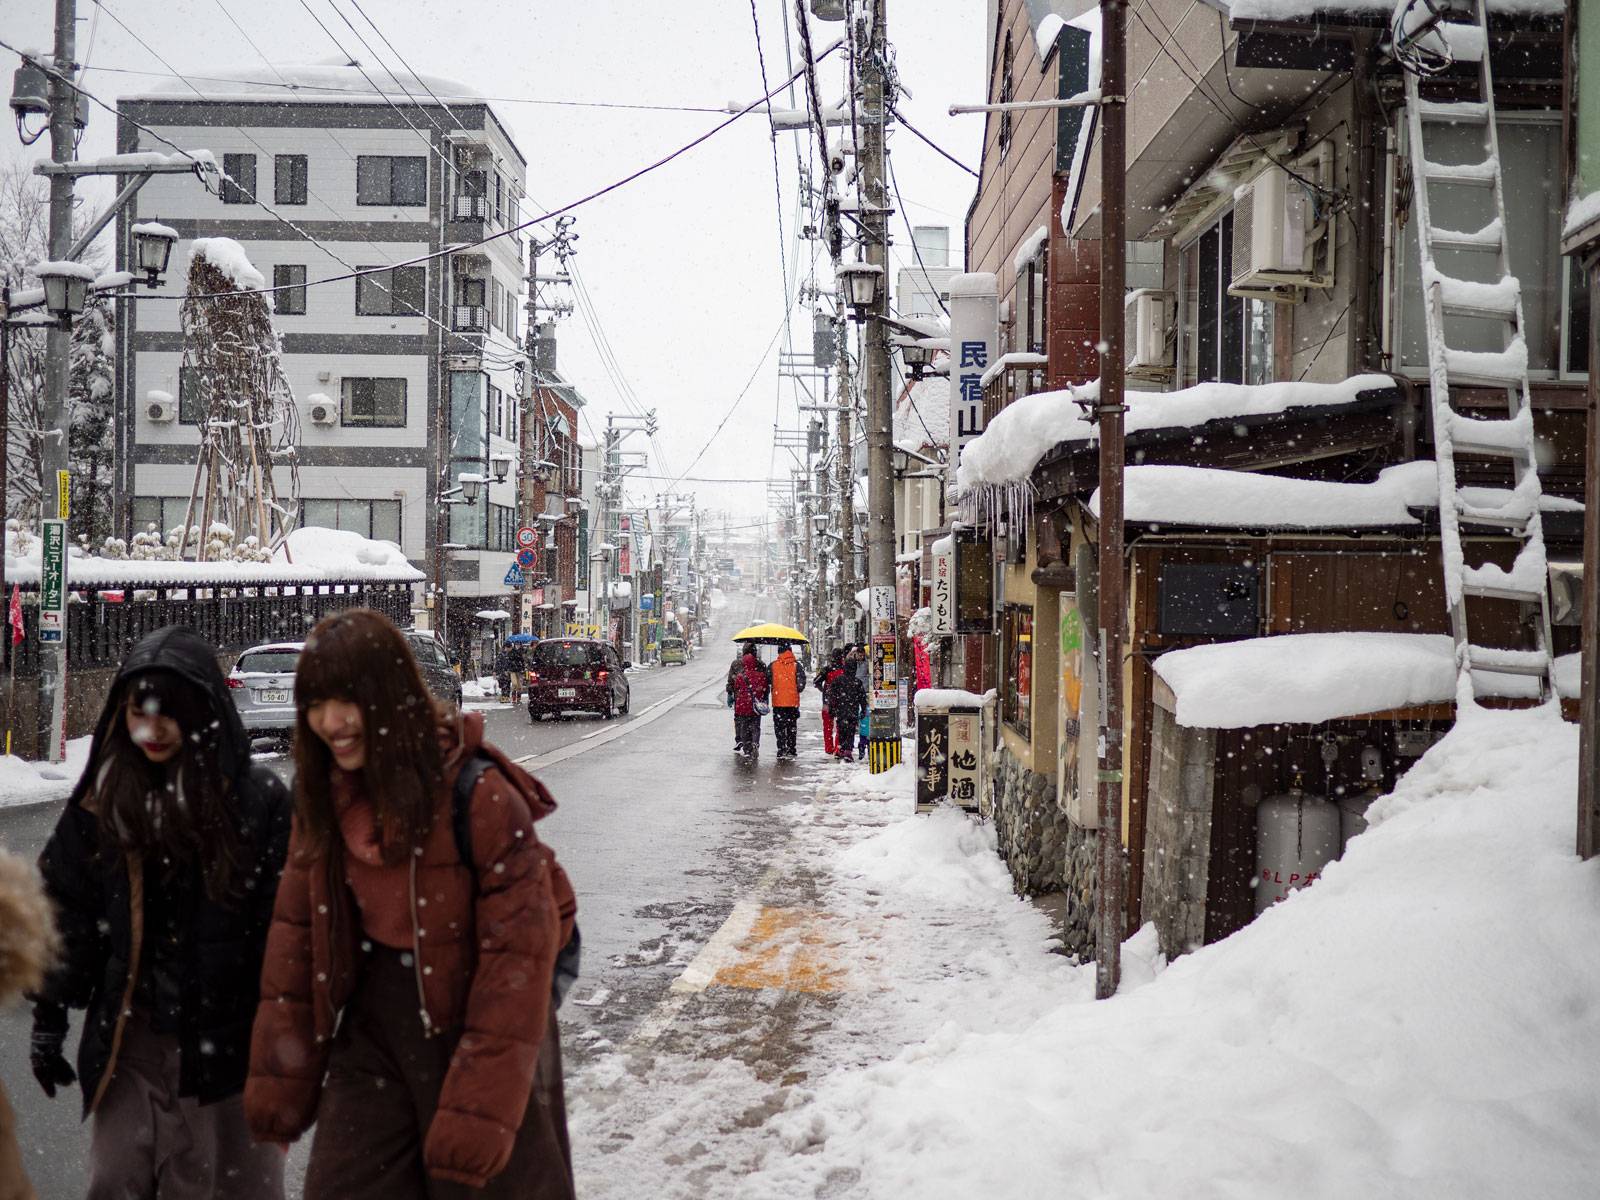 Pedestrians making their way along the snowy sidewalk